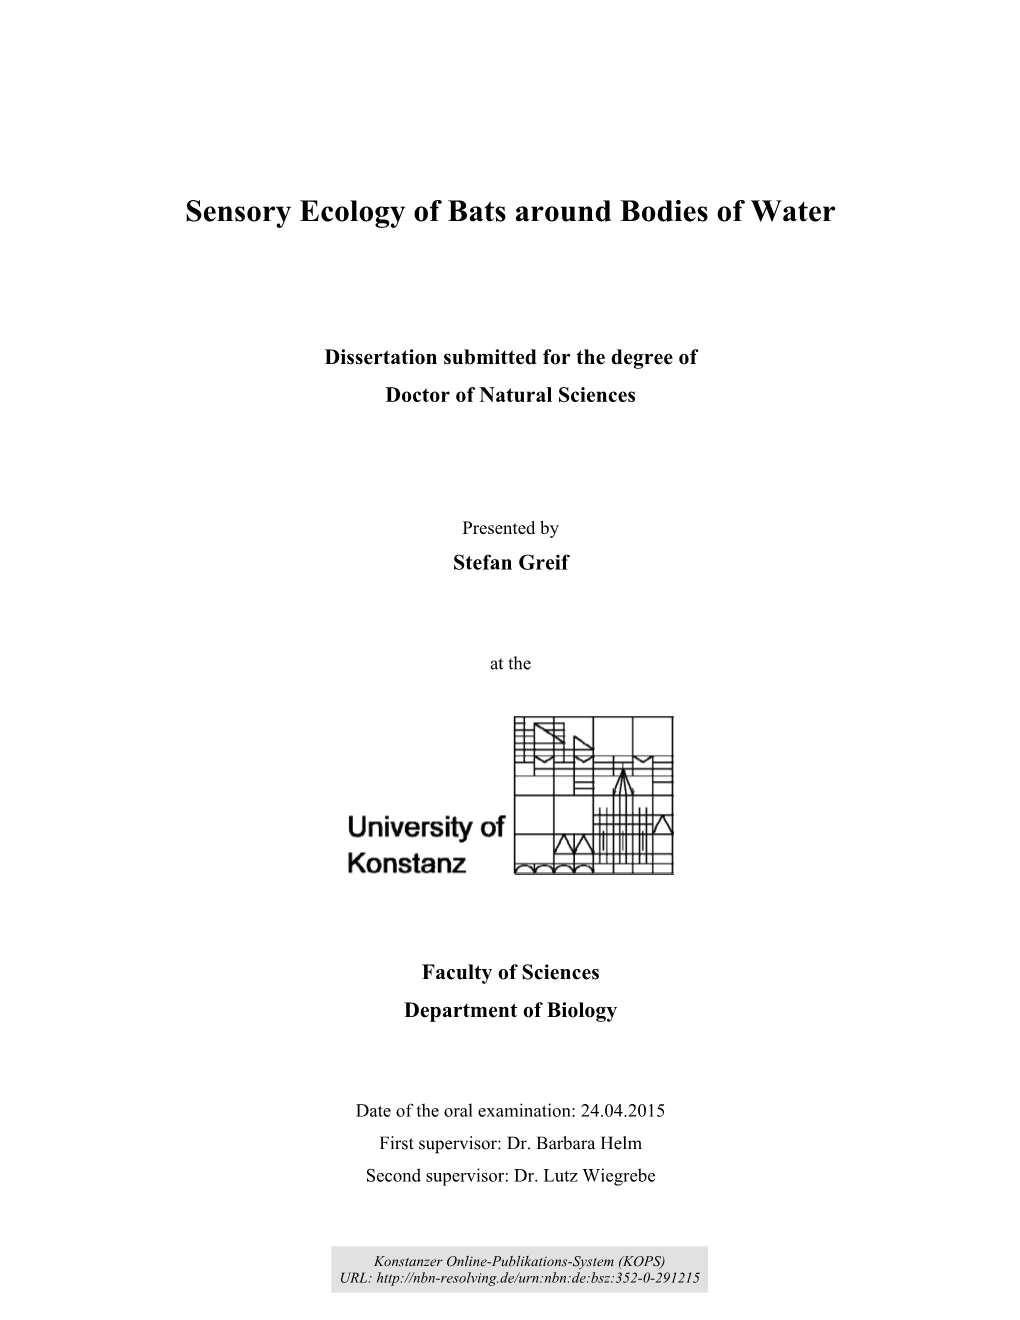 Sensory Ecology of Bats Around Bodies of Water